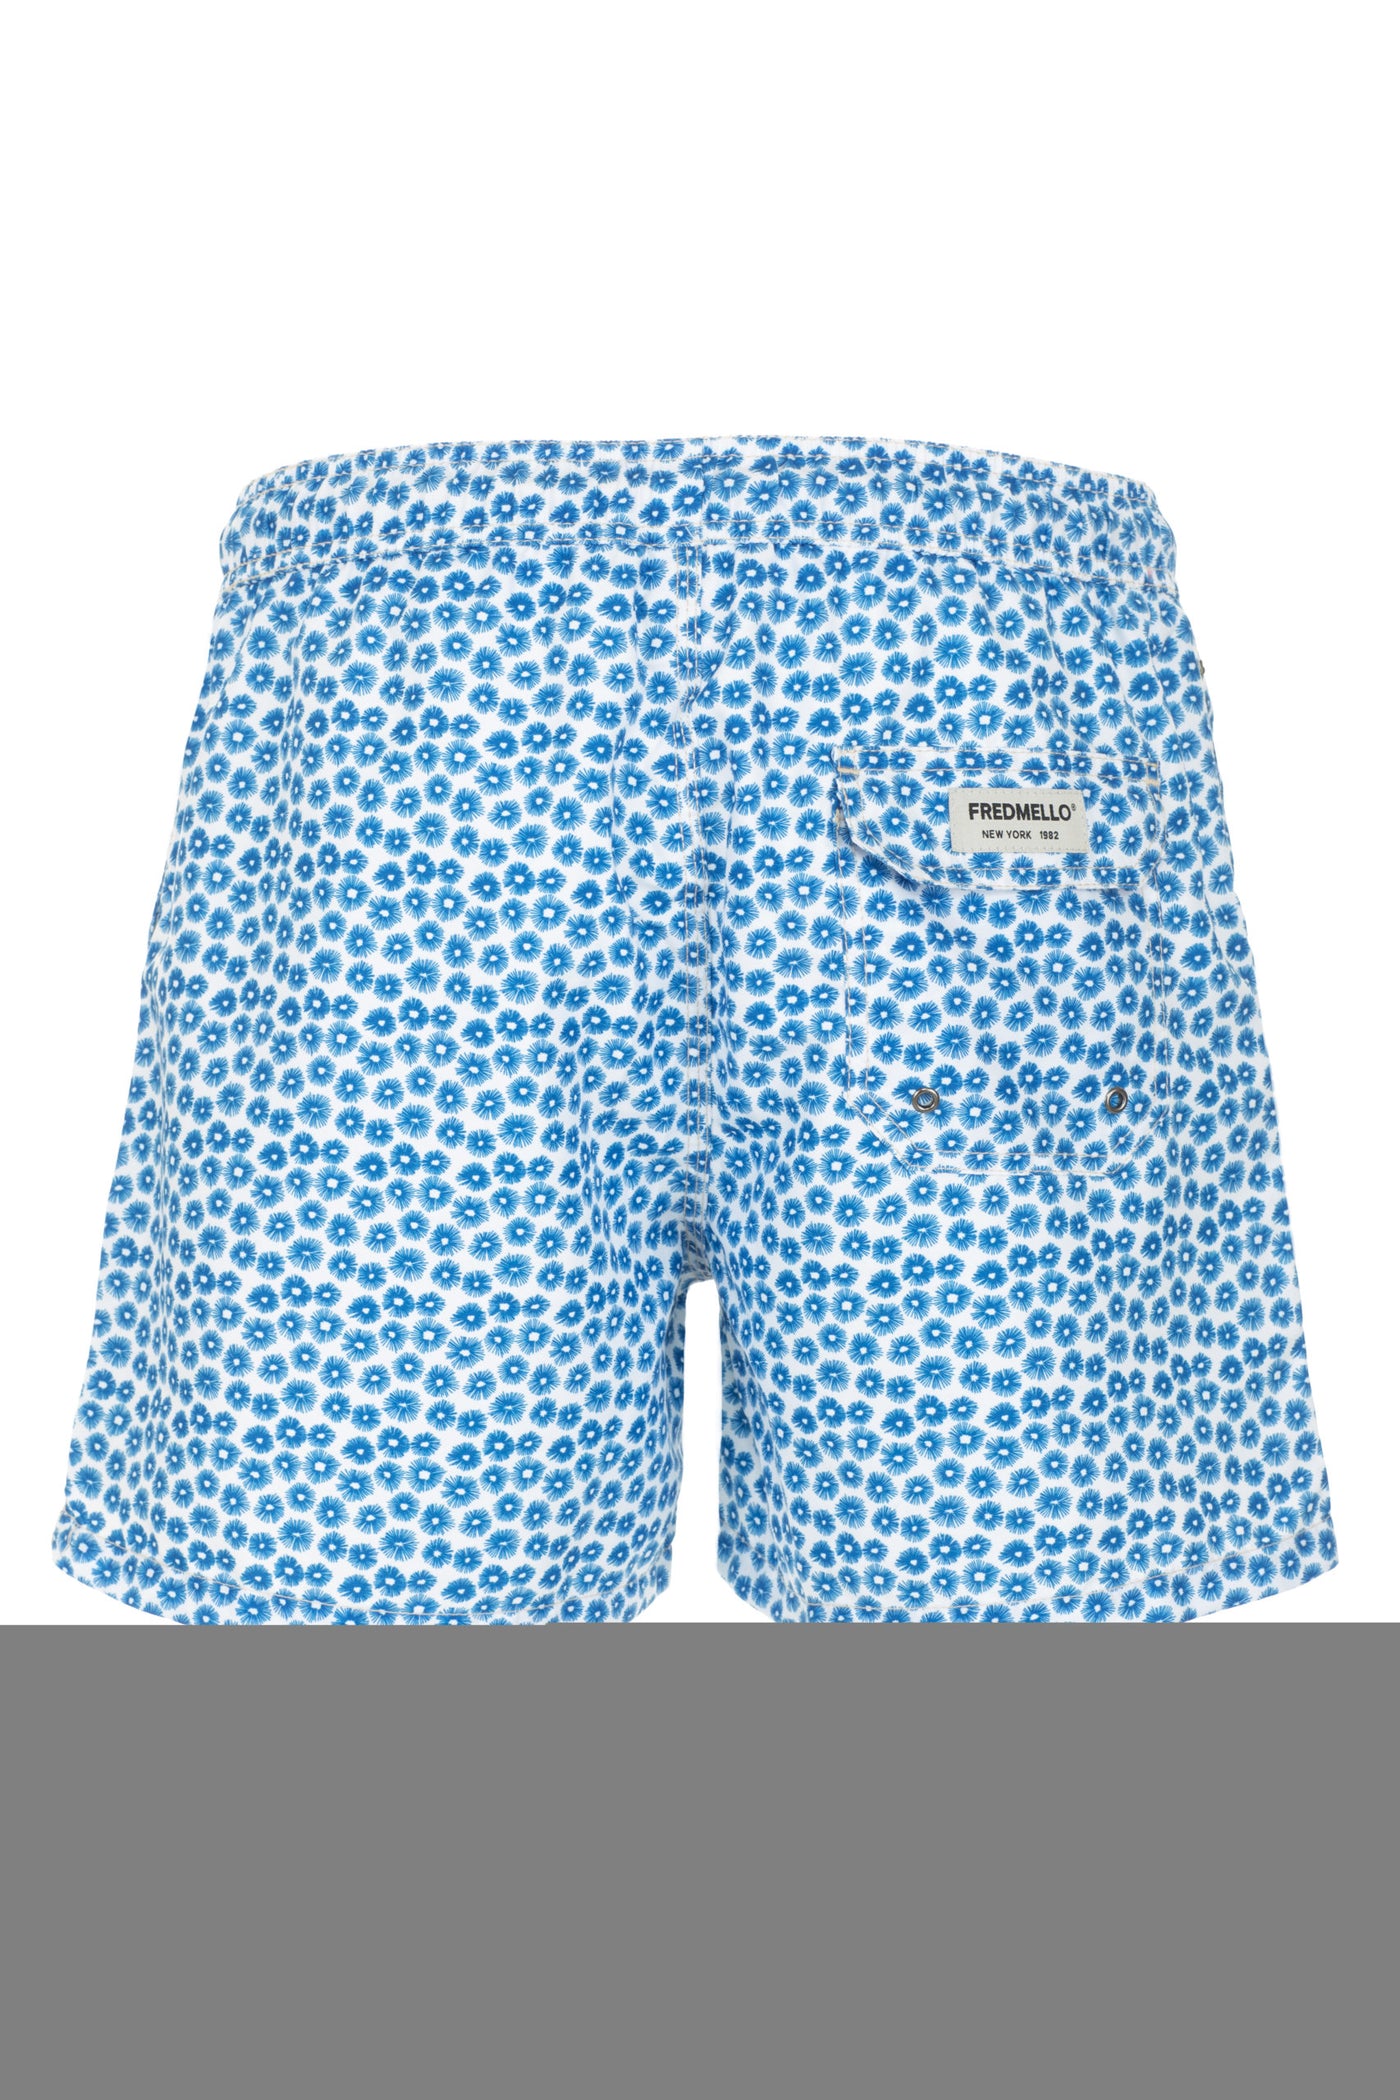 Fred Mello Light Blue Polyester Swimwear